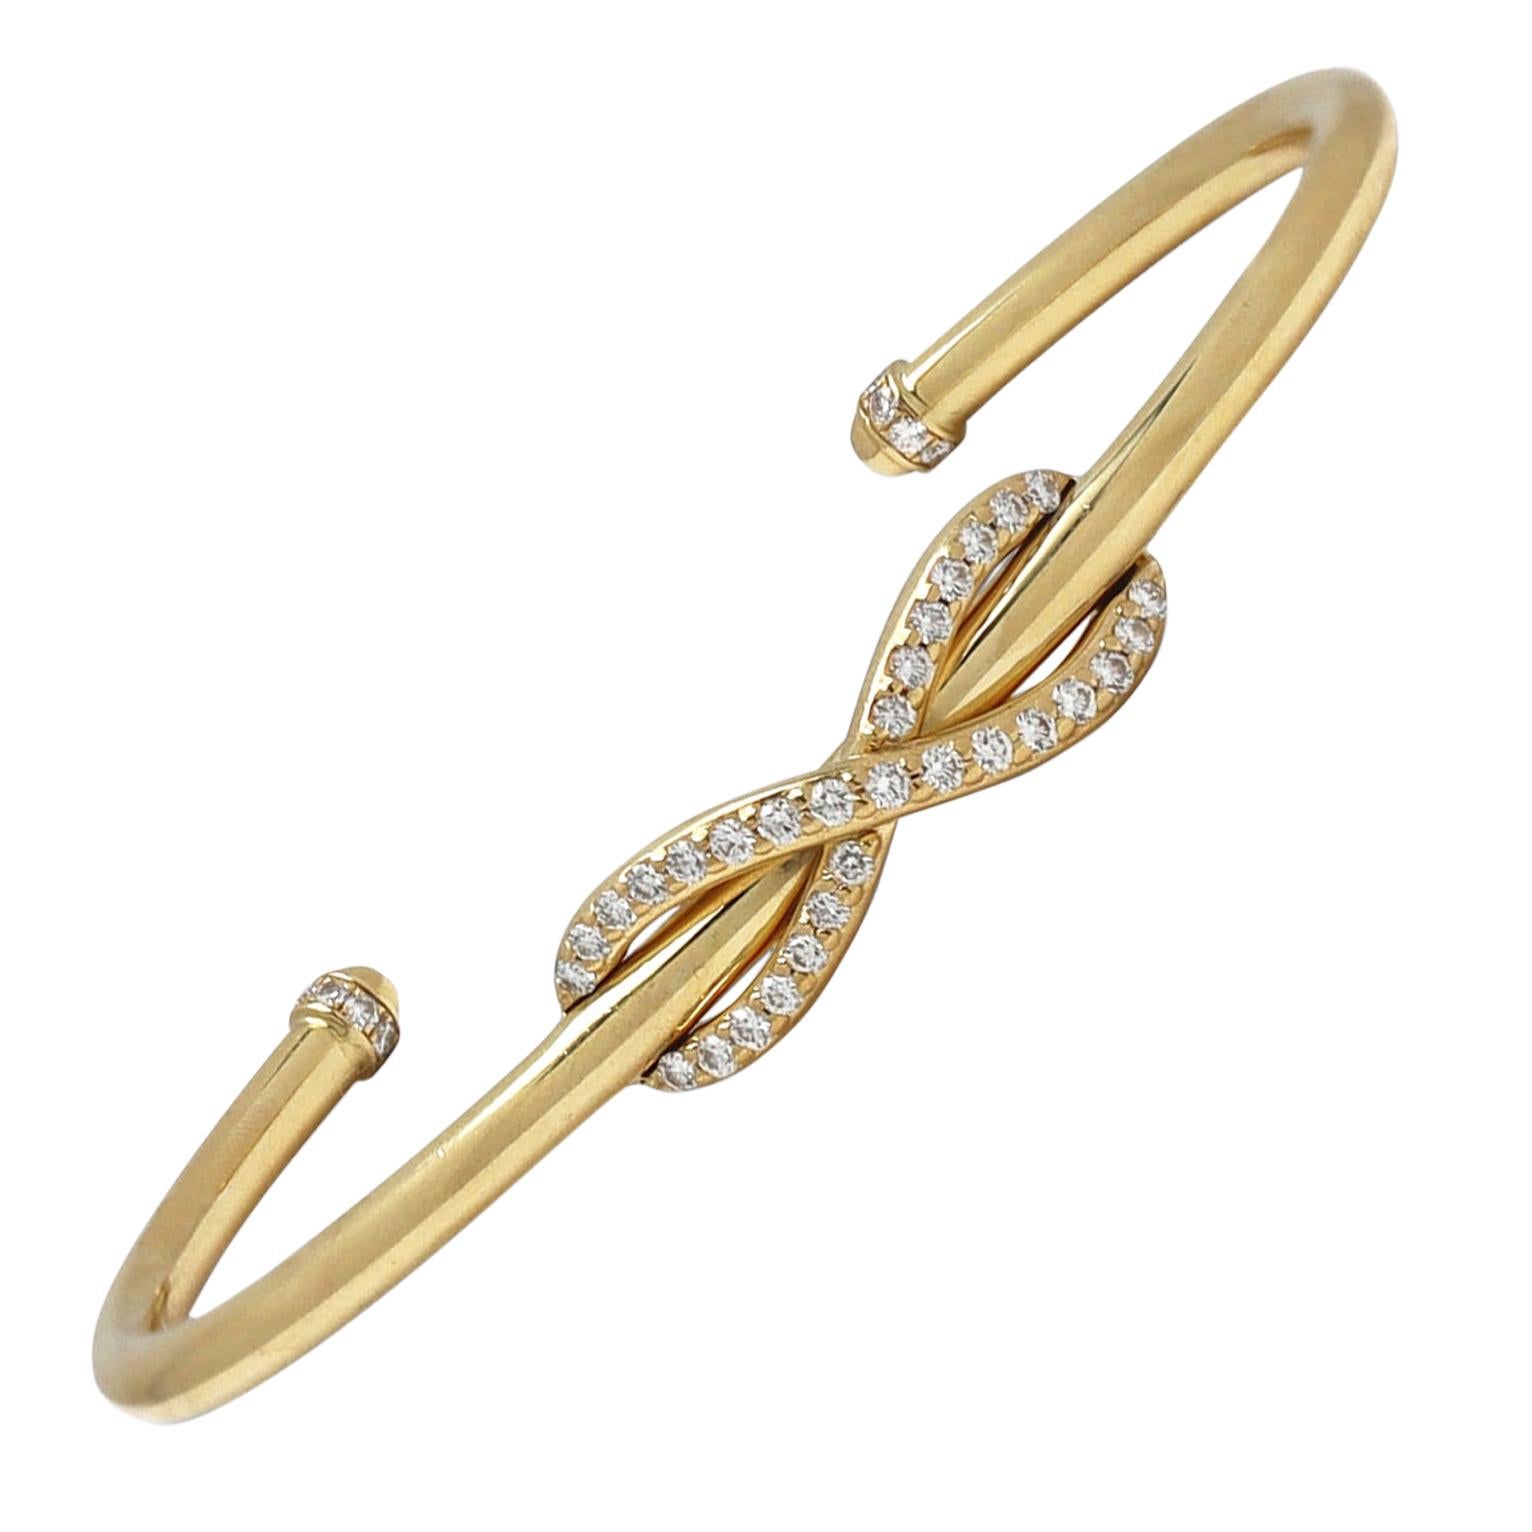 Tiffany & Co. 'Infinity' Yellow Gold and Diamond Cuff Bracelet